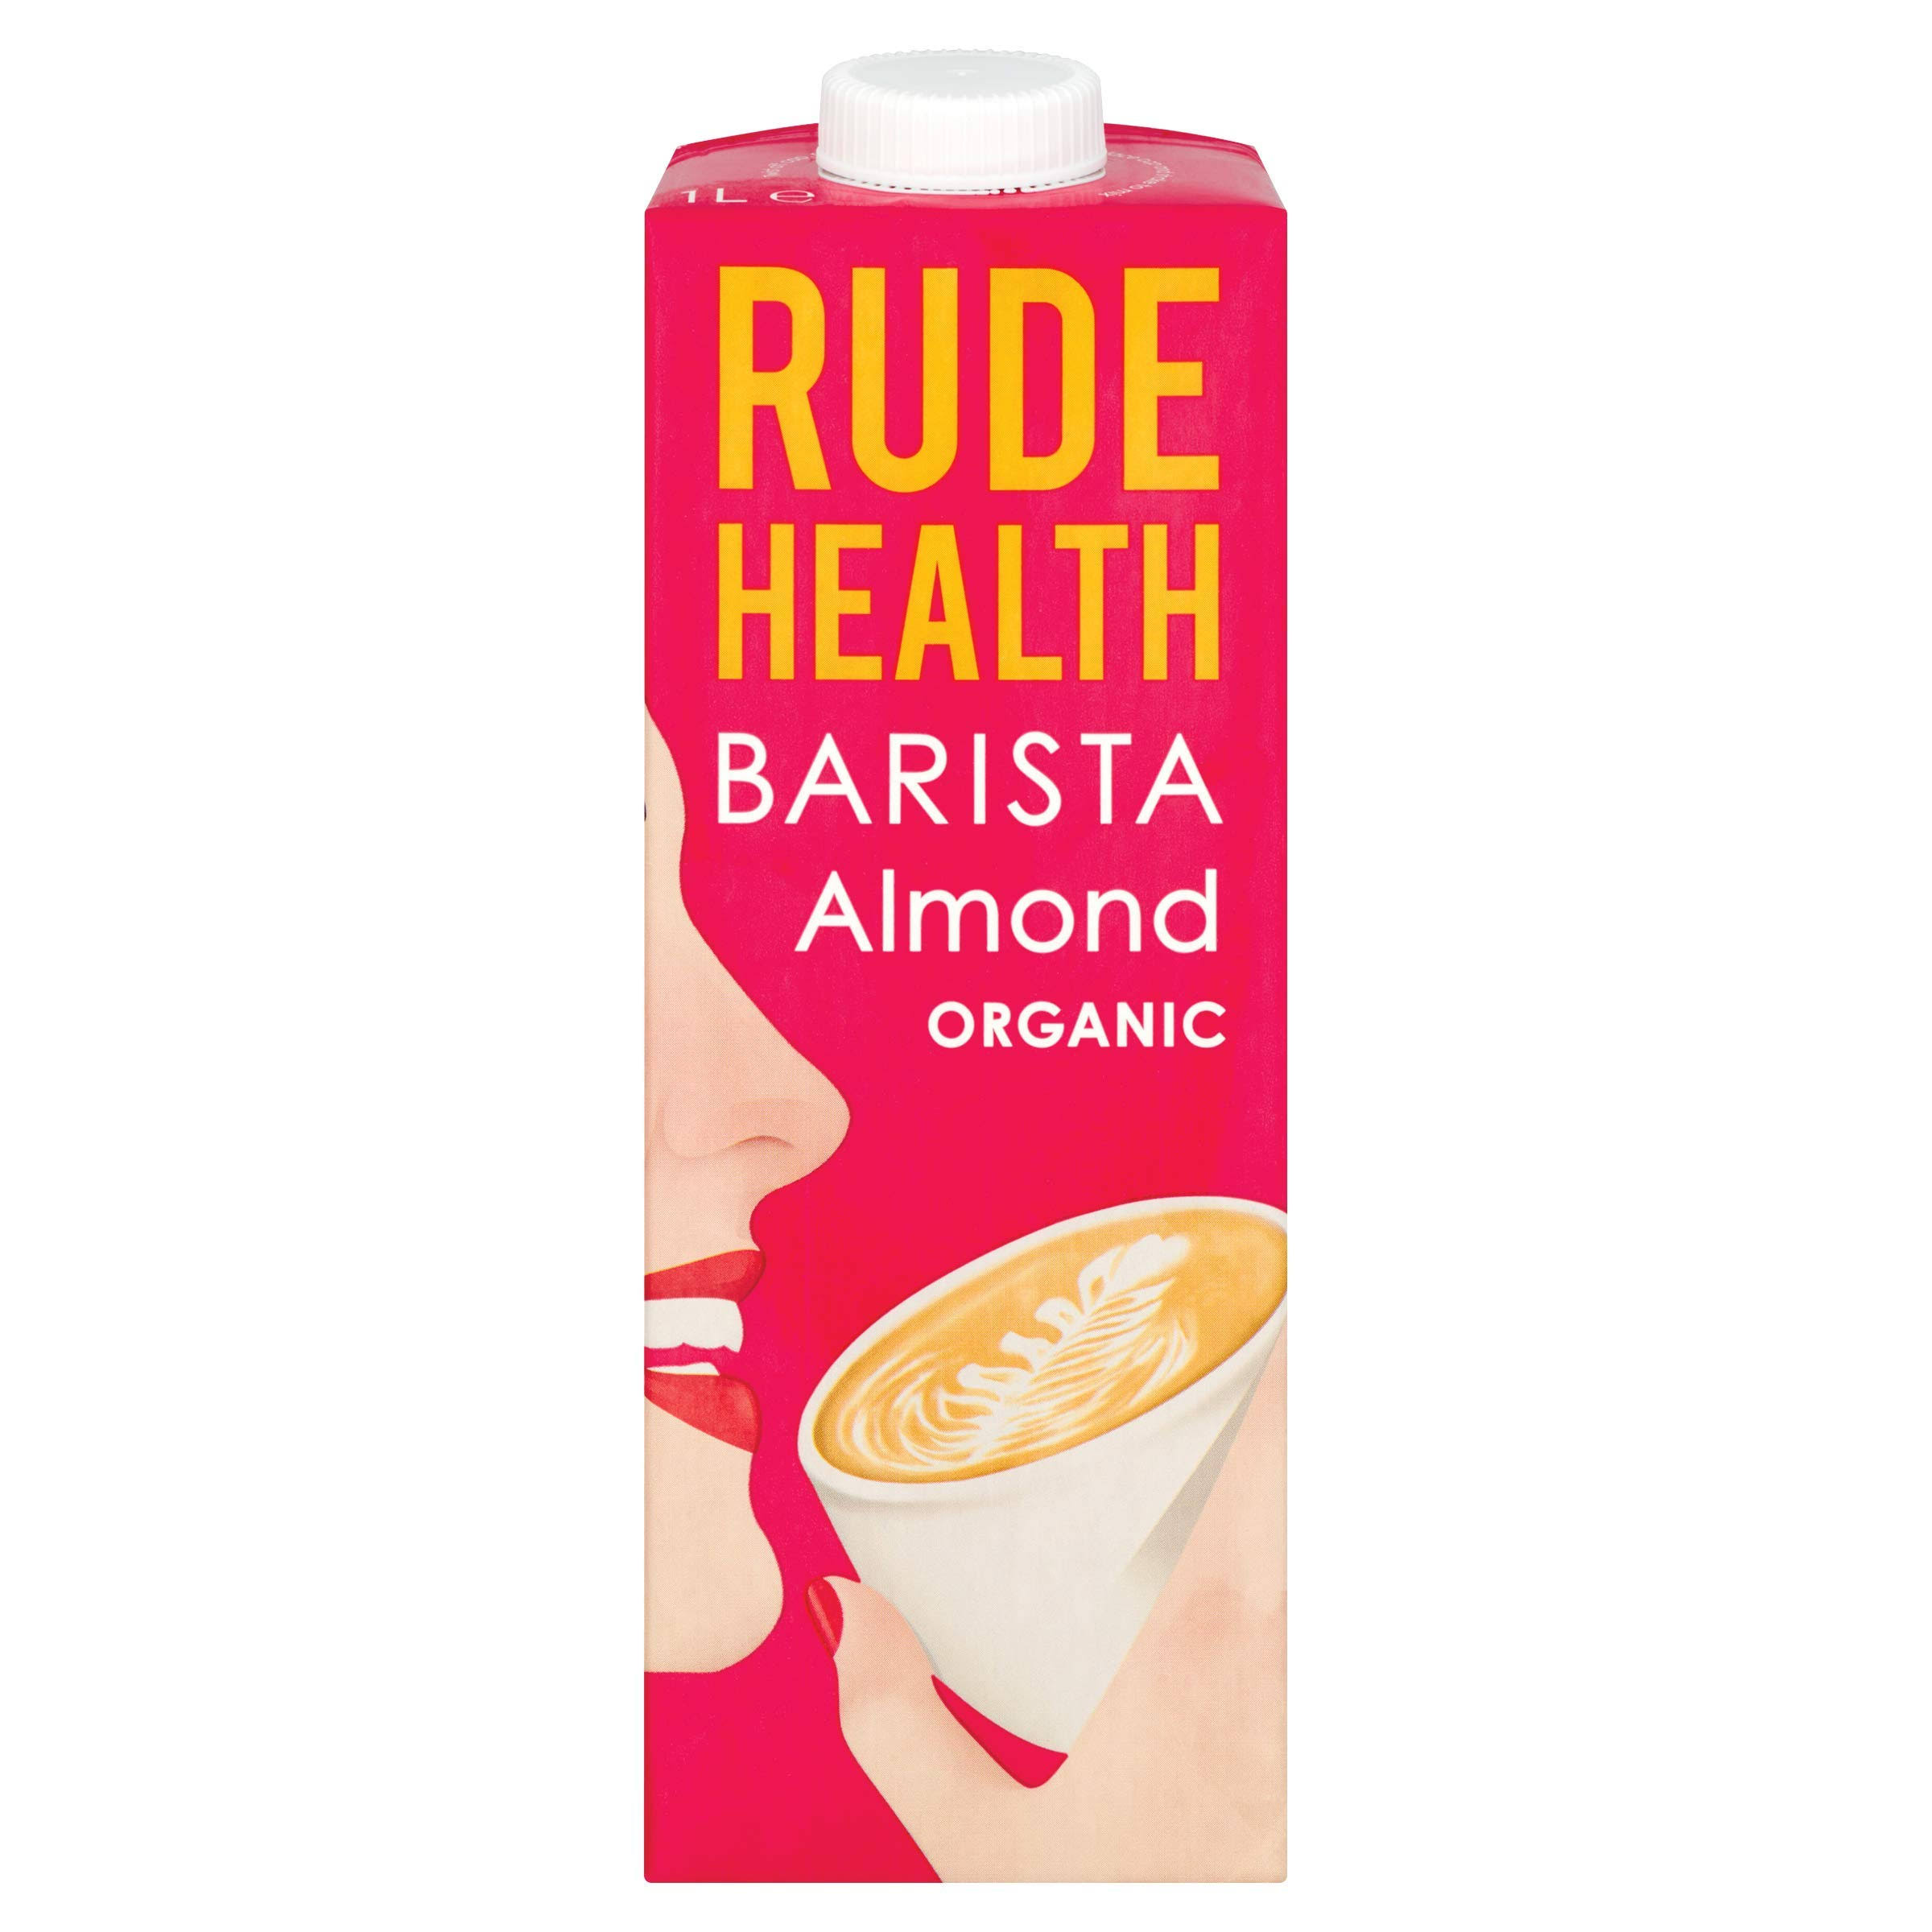 Rude Health Organic Almond Barista Drink 1 Litre